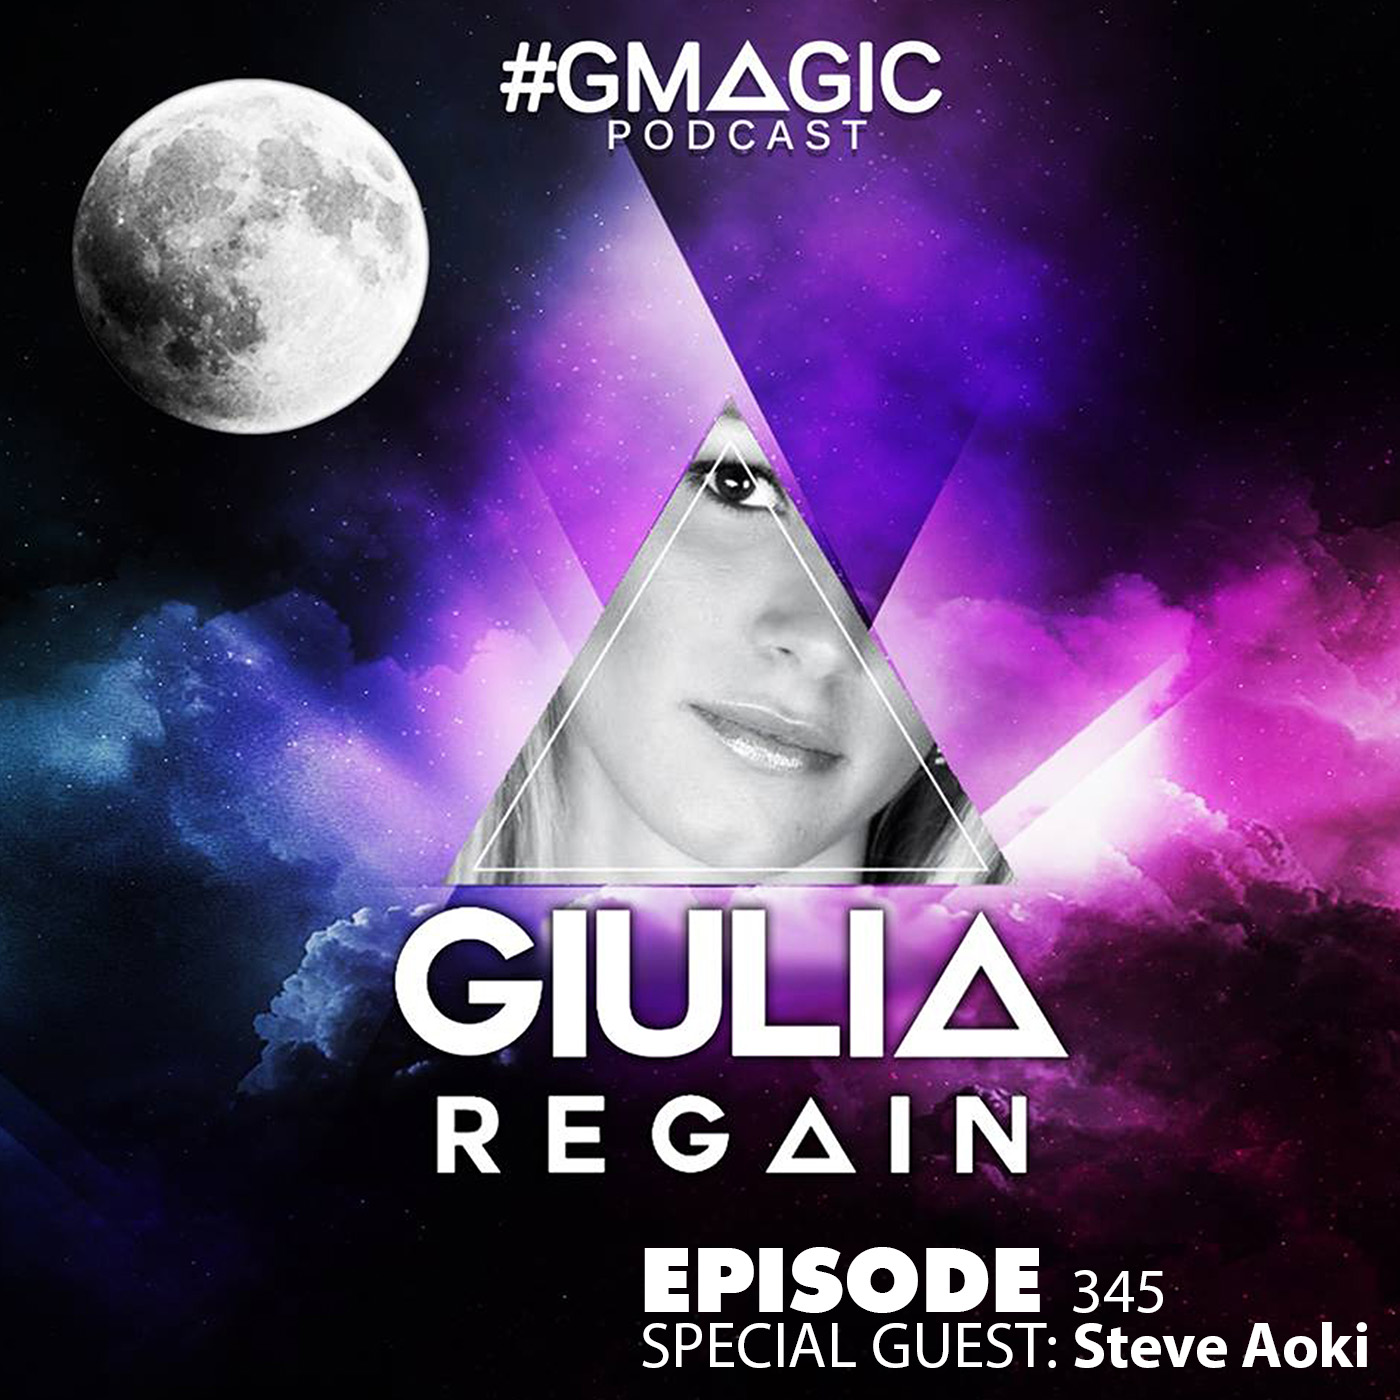 #Gmagic Podcast 345 - Special Guest: Steve Aoki